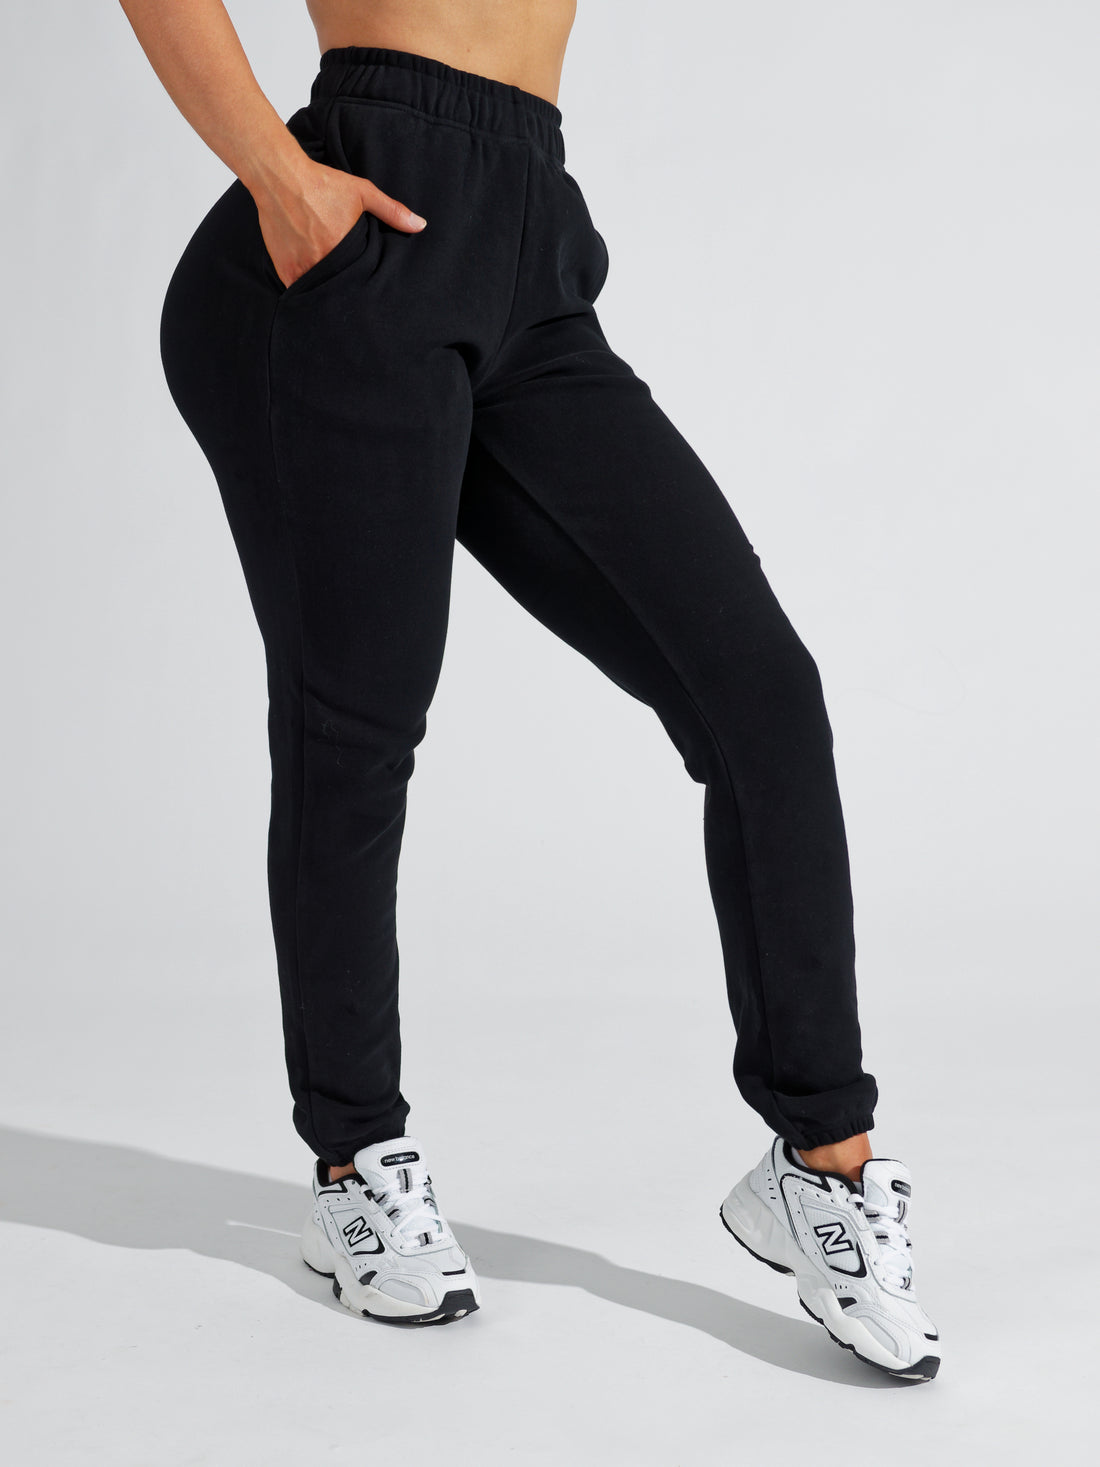 Athletic Joggers | Women's Lounge Pants